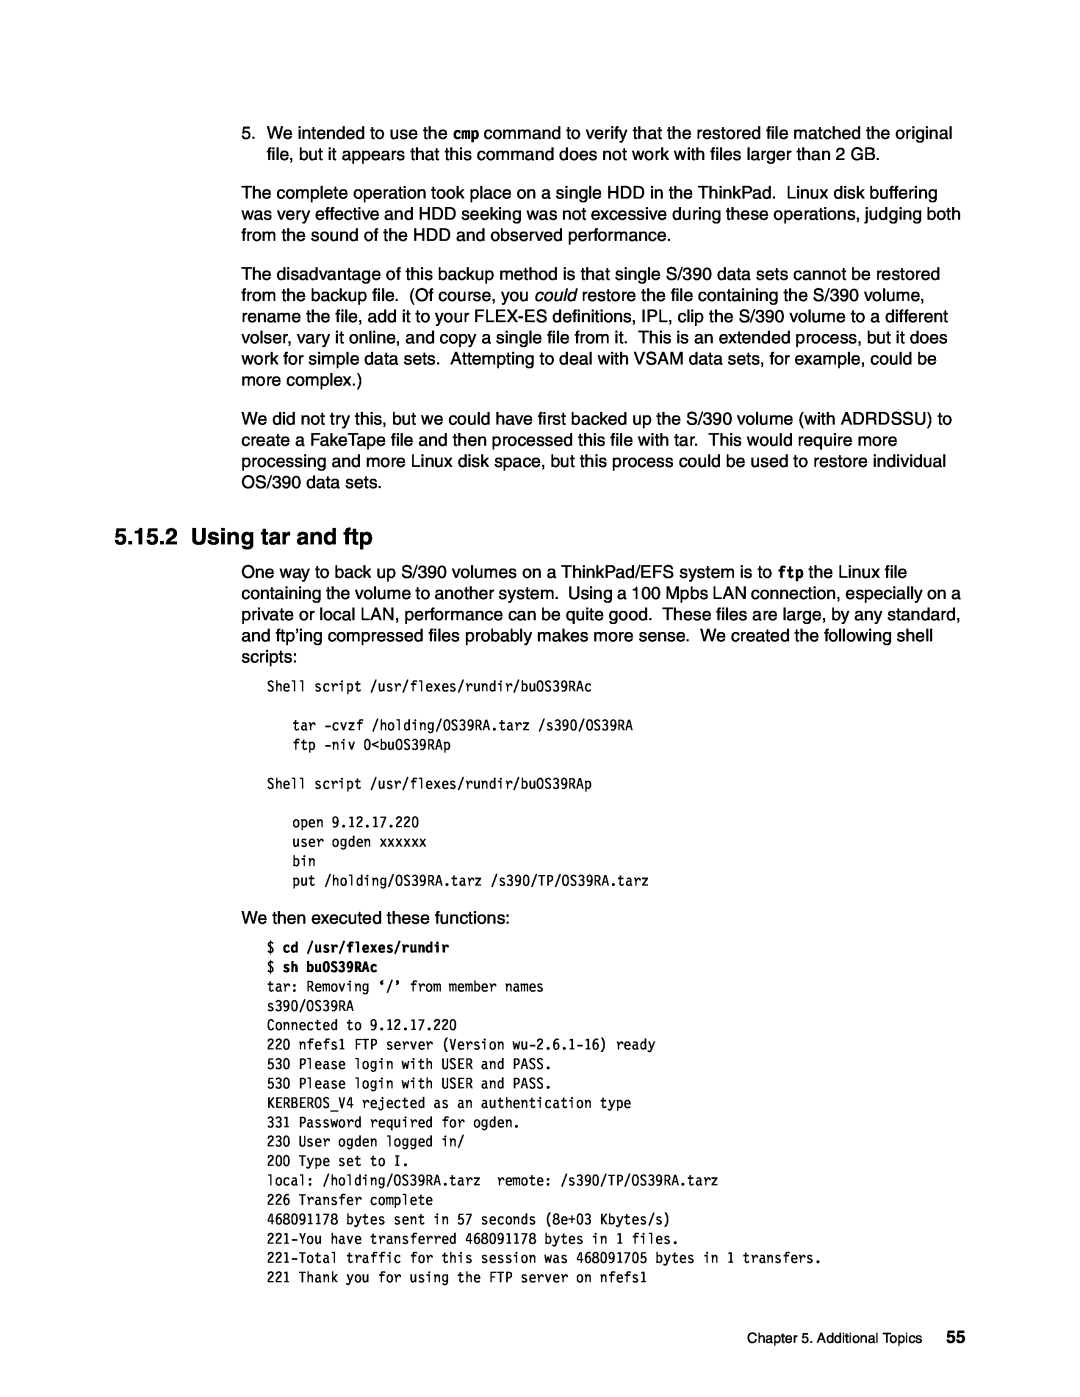 IBM s/390 manual Using tar and ftp 